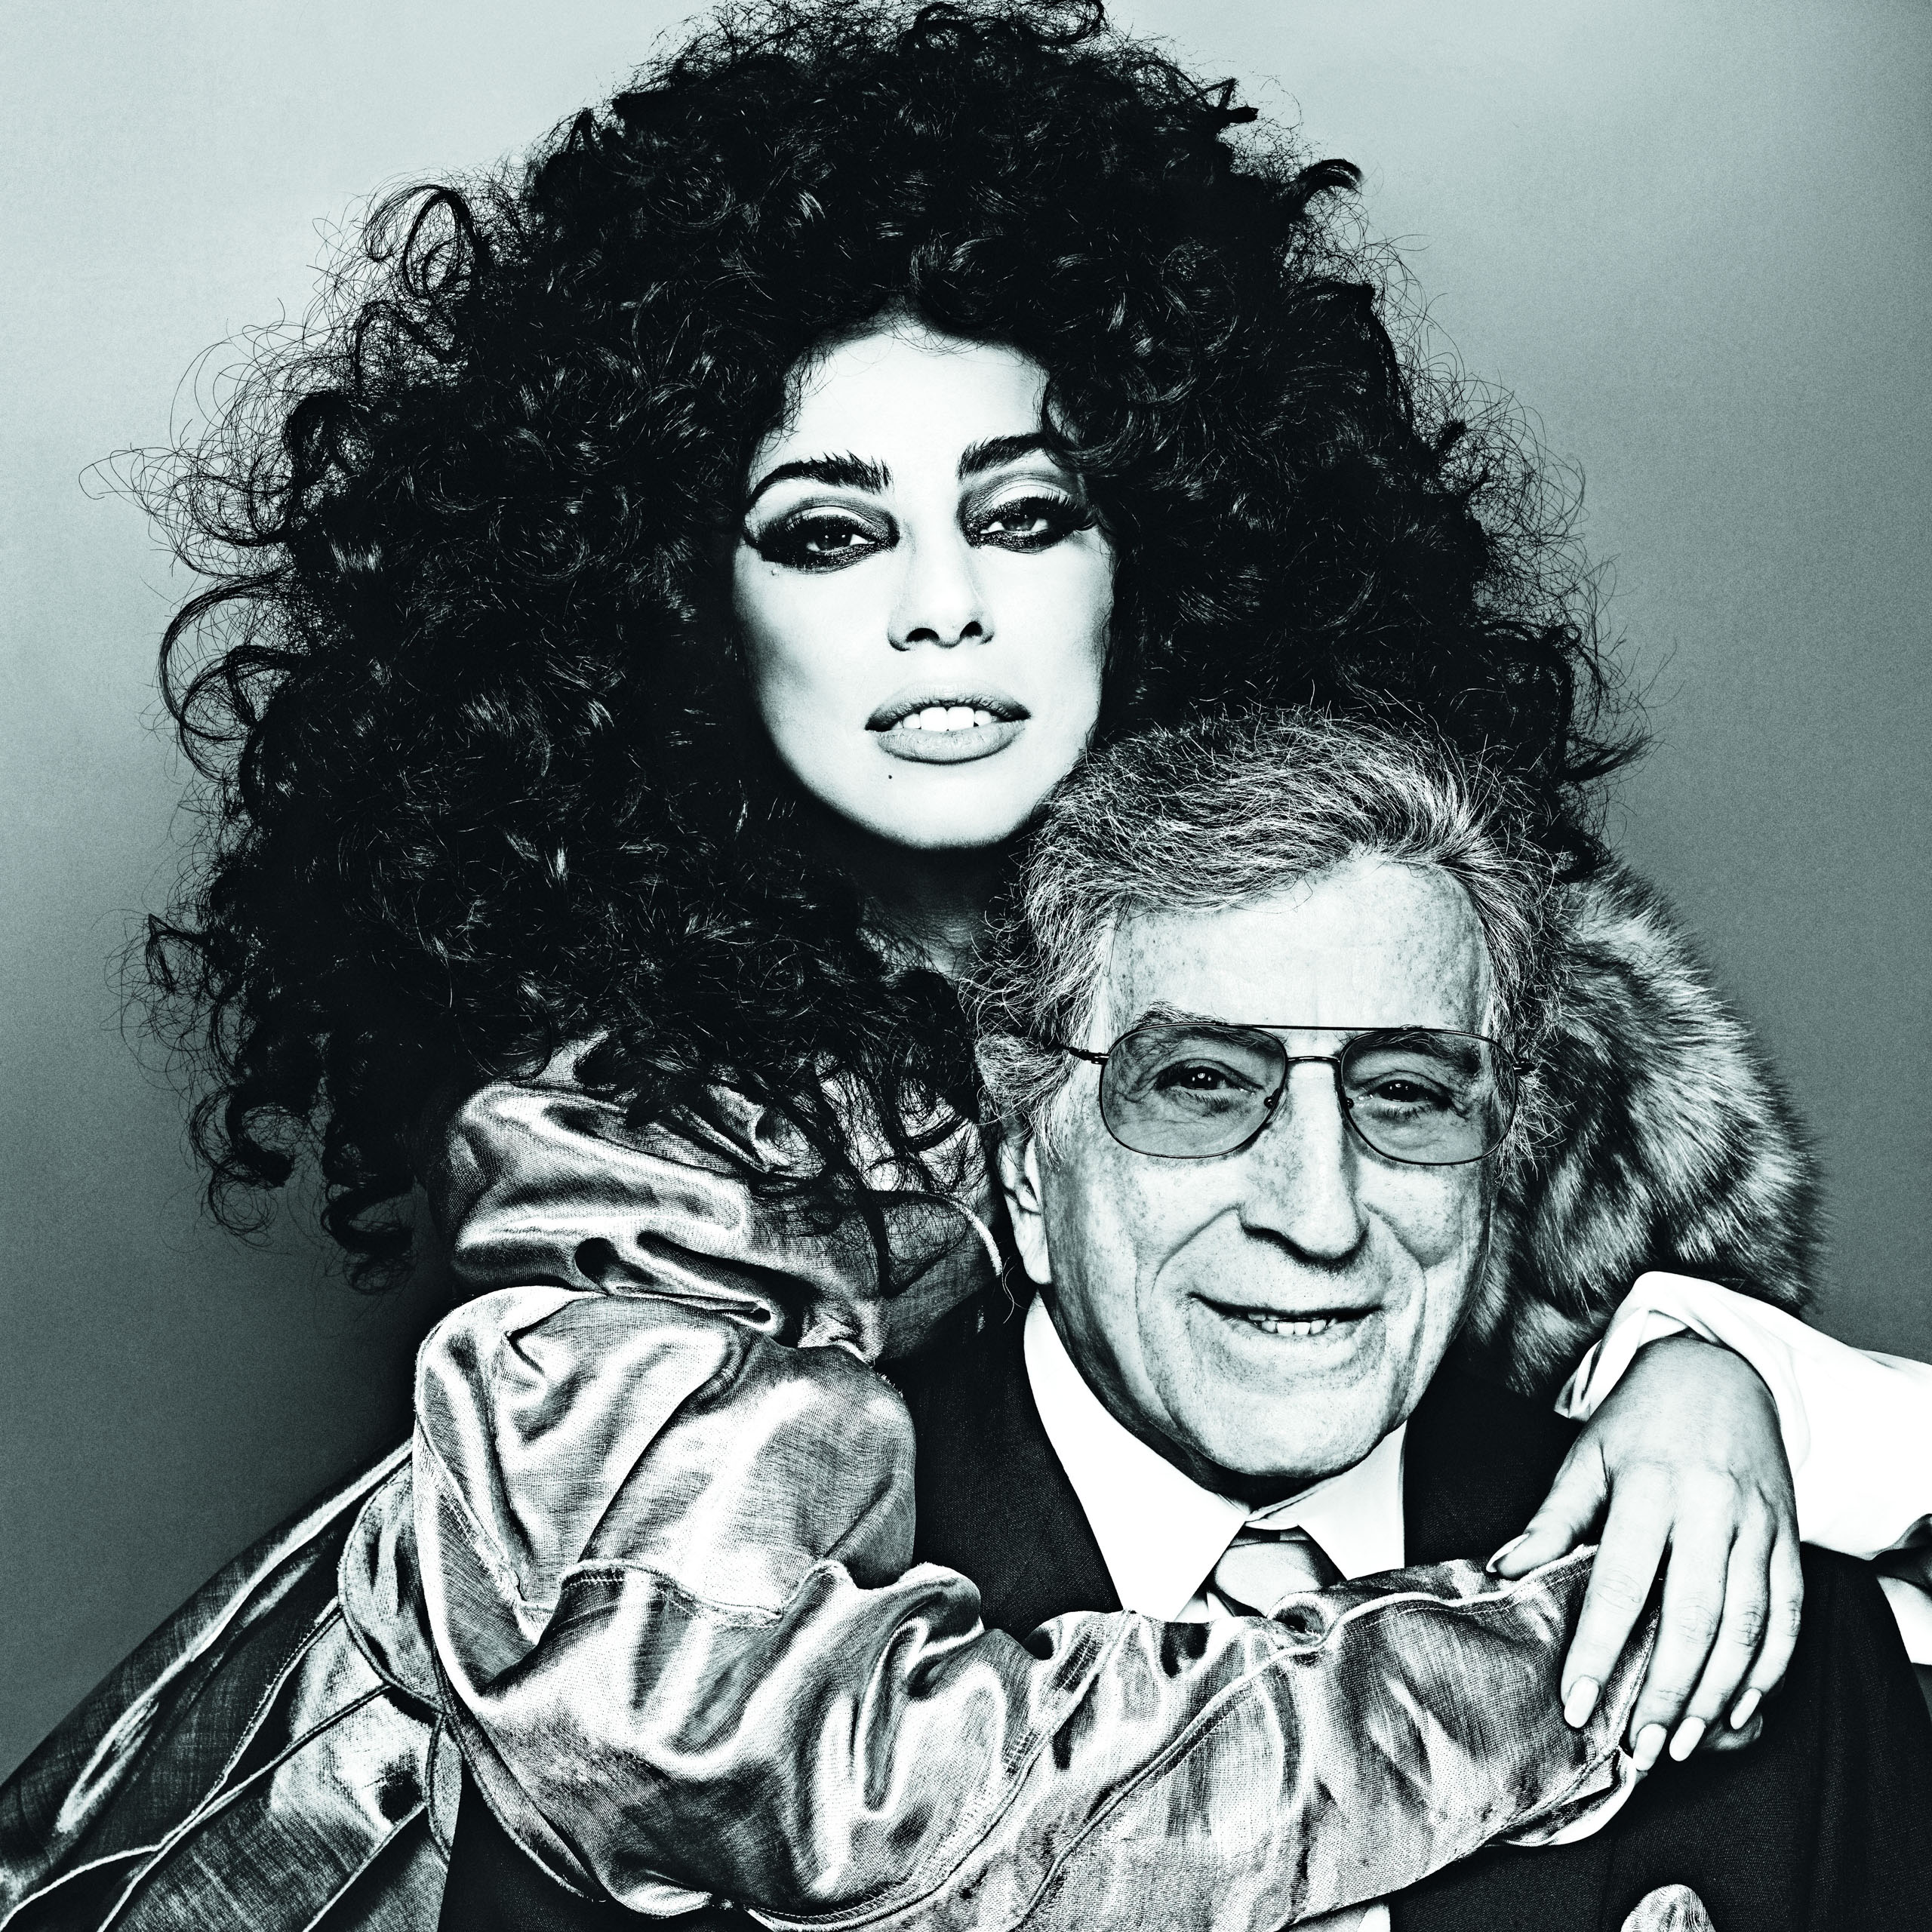 Lady Gaga & Tony Bennett "Love for Sale" | Fanaticar Magazin